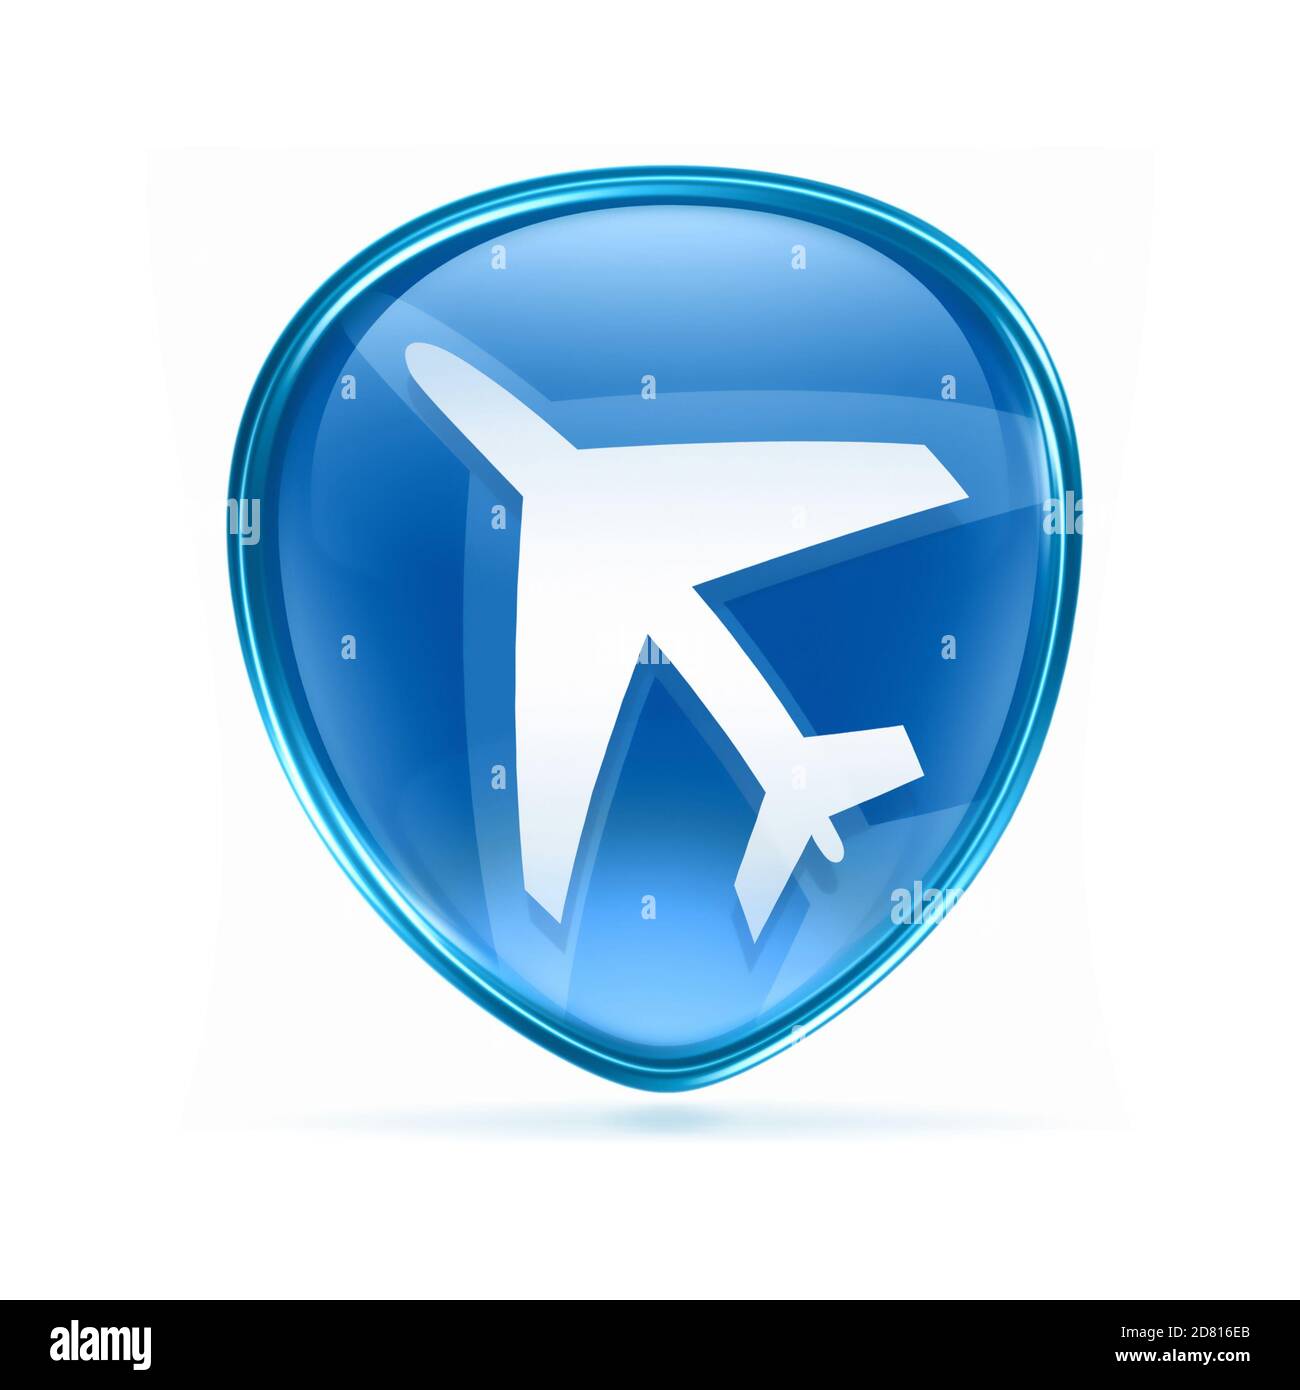 Airplane icon blue, isolated on white background. Stock Photo